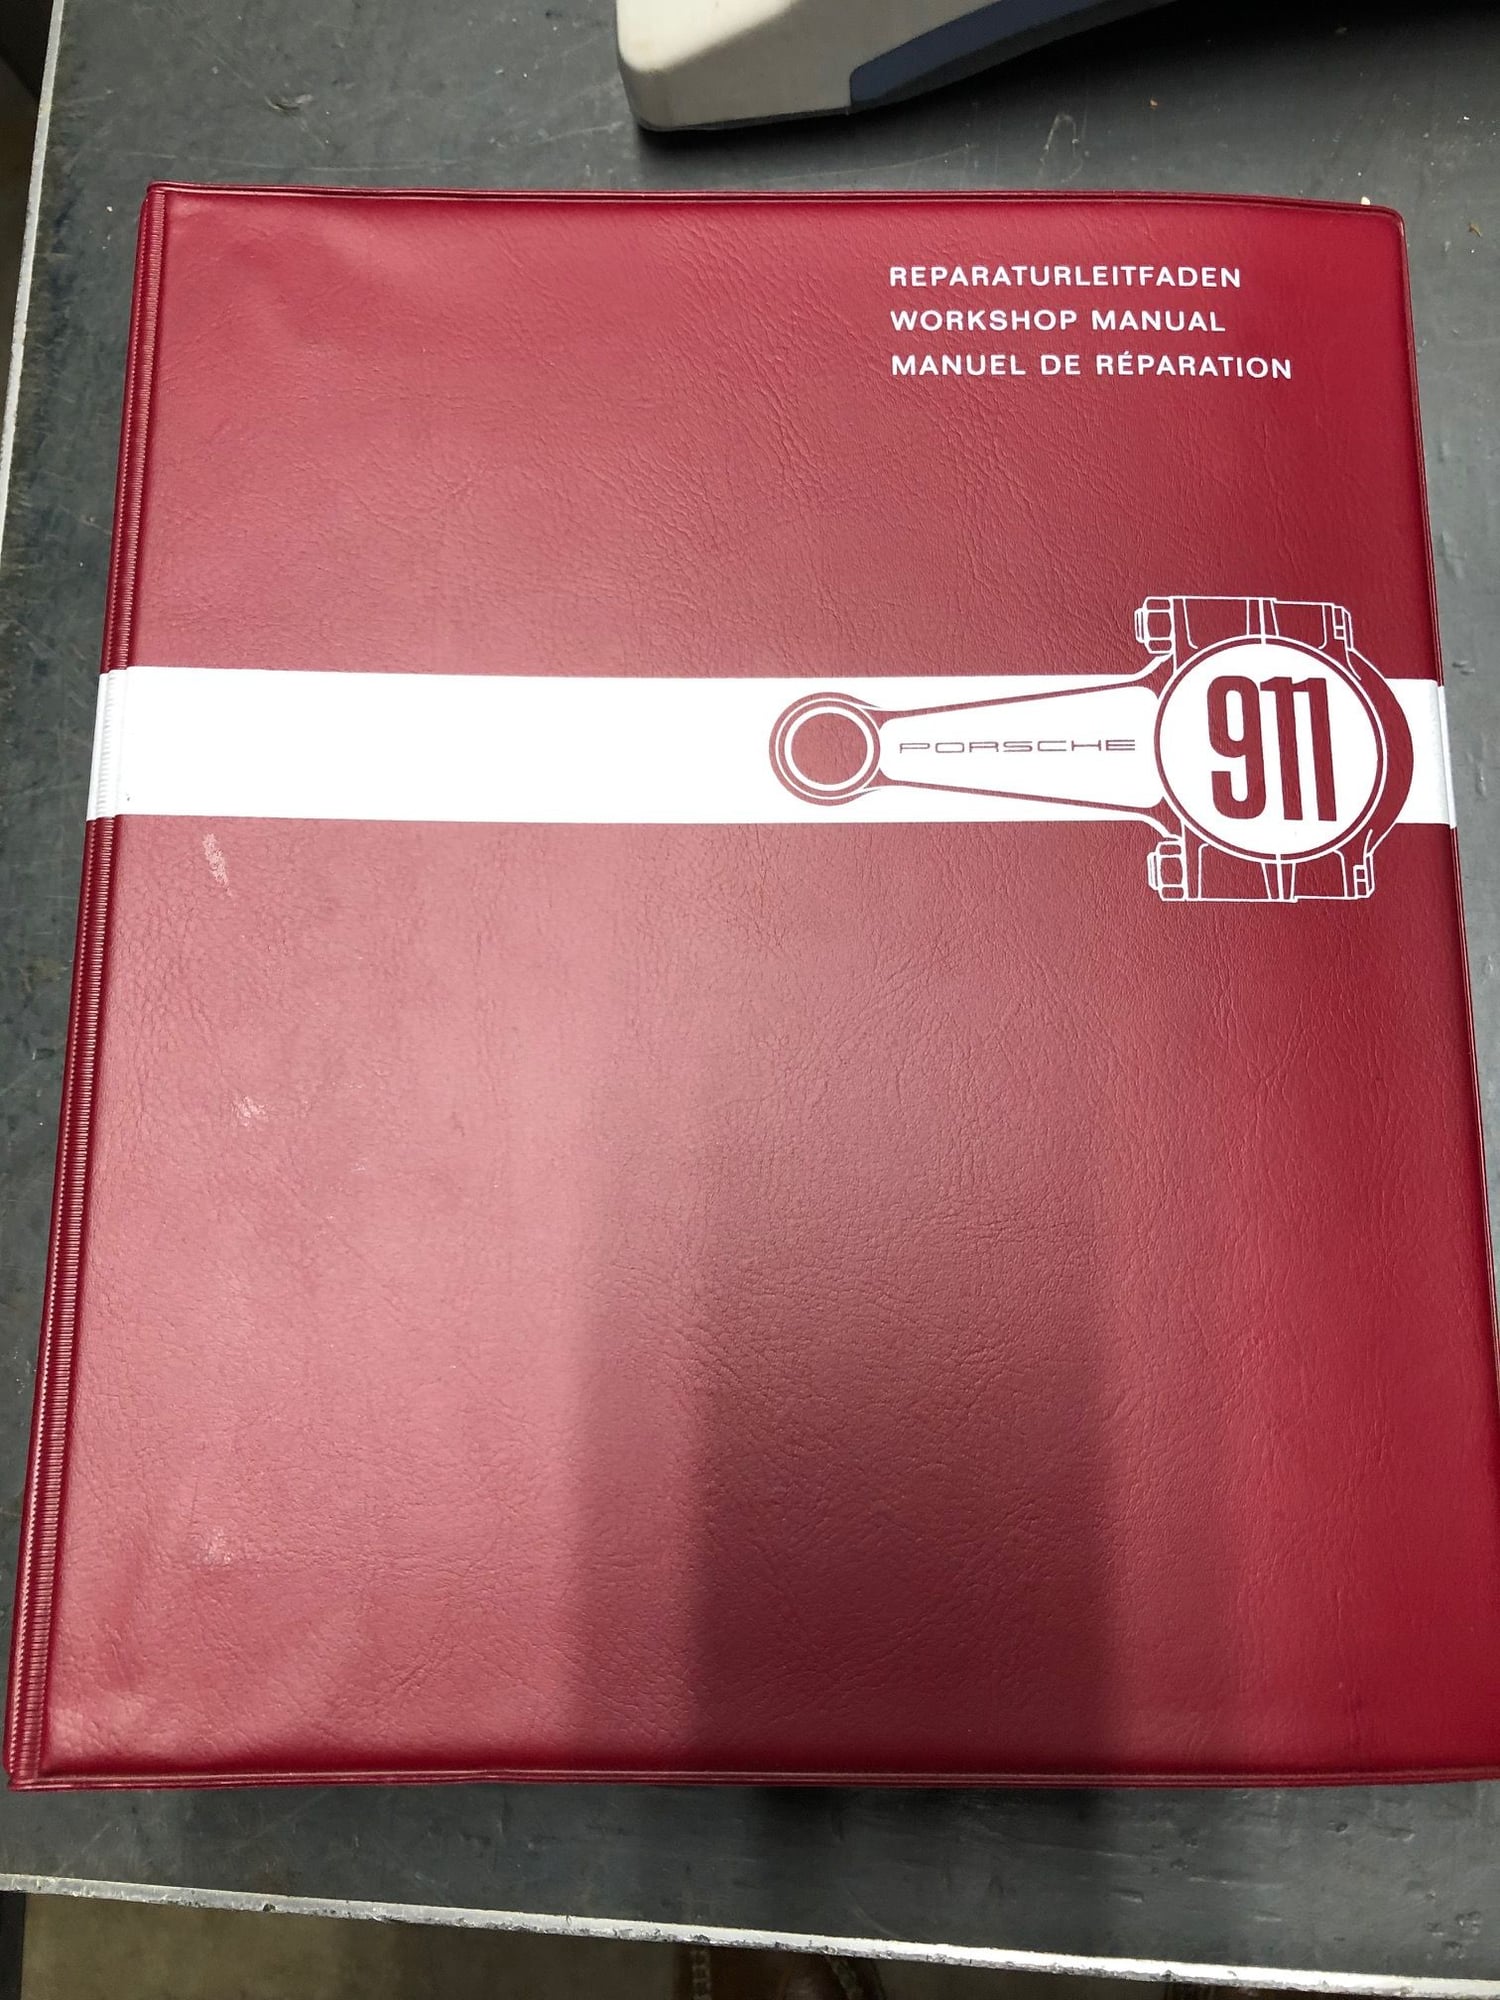 Miscellaneous - Porsche 911 Workshop Manual Copyright 1965 - Used - 1965 to 1973 Porsche 911 - Sequim, WA 98382, United States